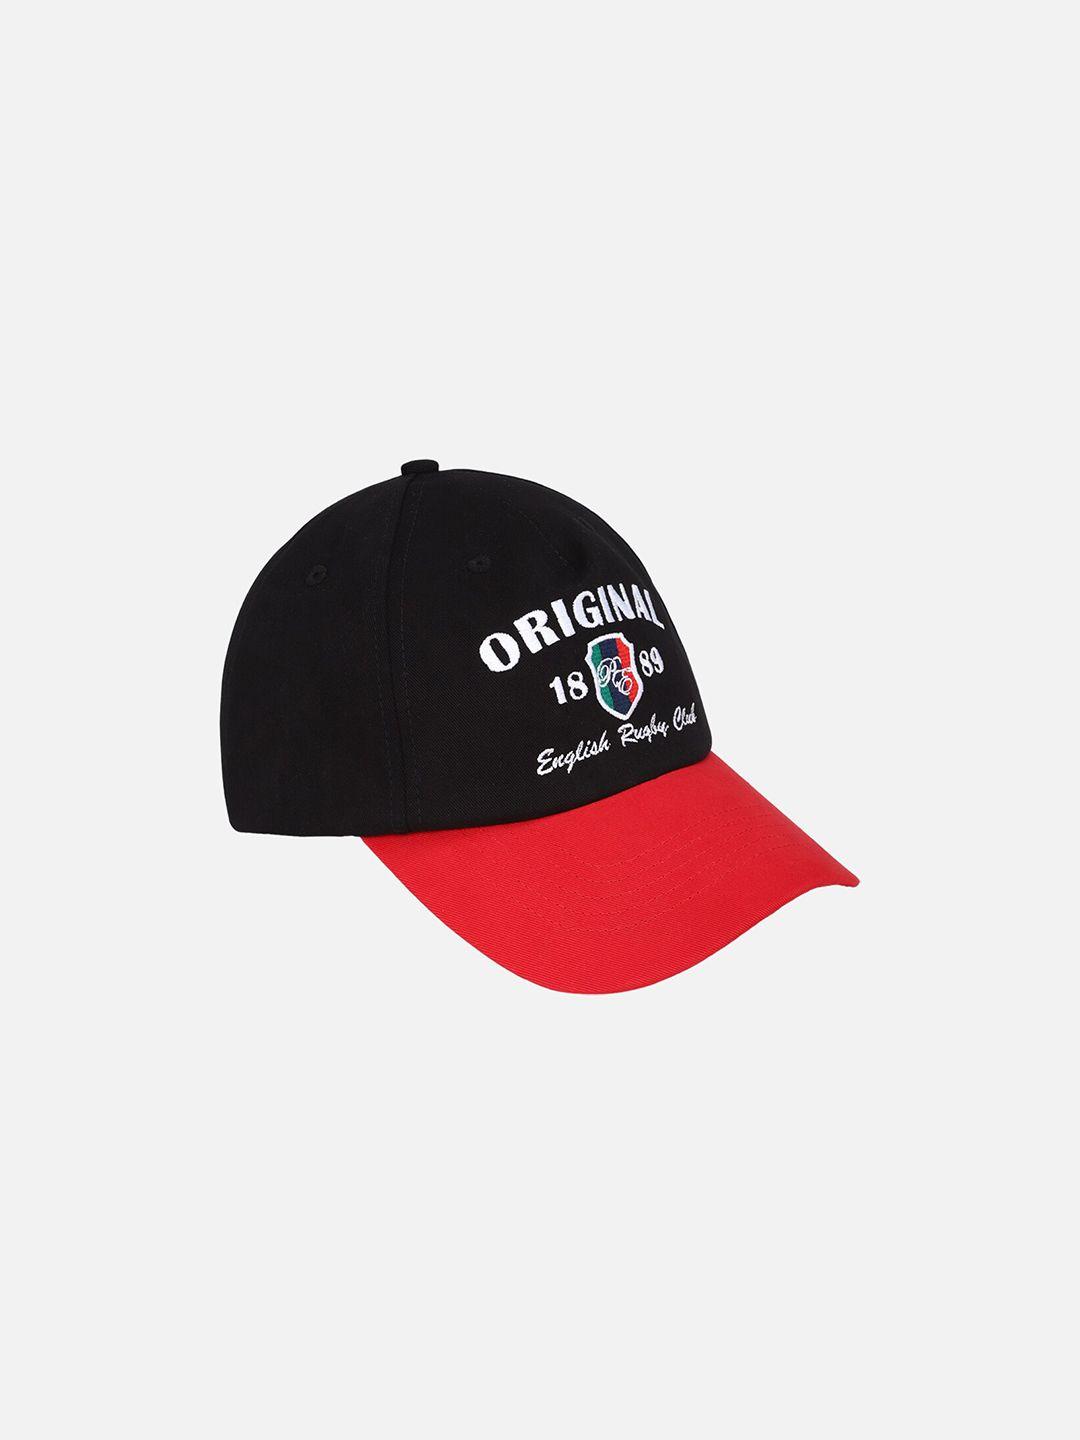 peter-england-men-black-&-red-printed-baseball-cap